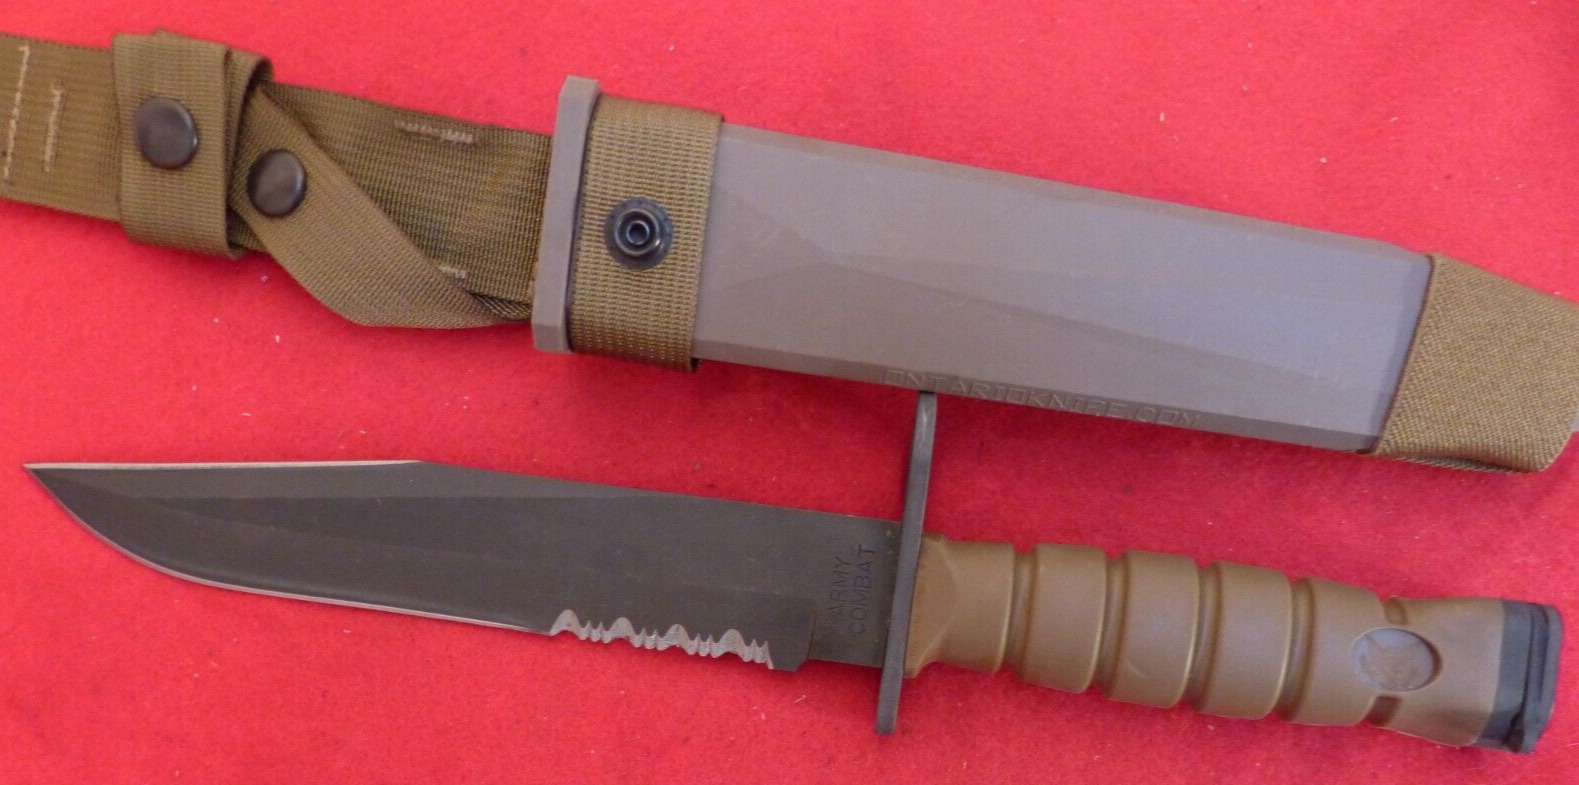 ORIGINAL Ontario USA US Army Combat fixed blade combo blade fighting knife